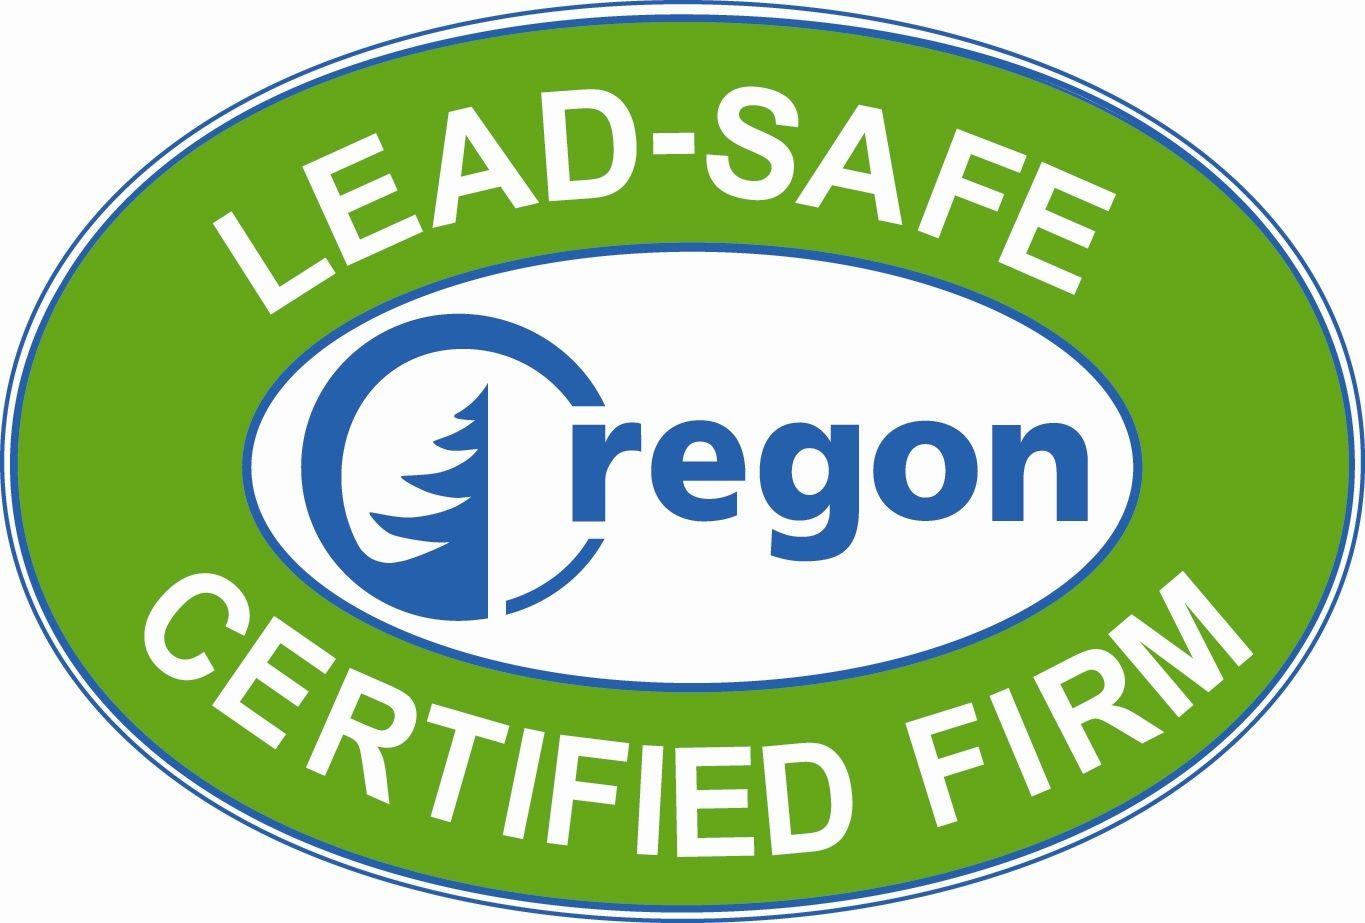 EPA Lead Safe Logo - Lead Safe Certified Logo - Oregon Home Builders Association - Oregon HBA